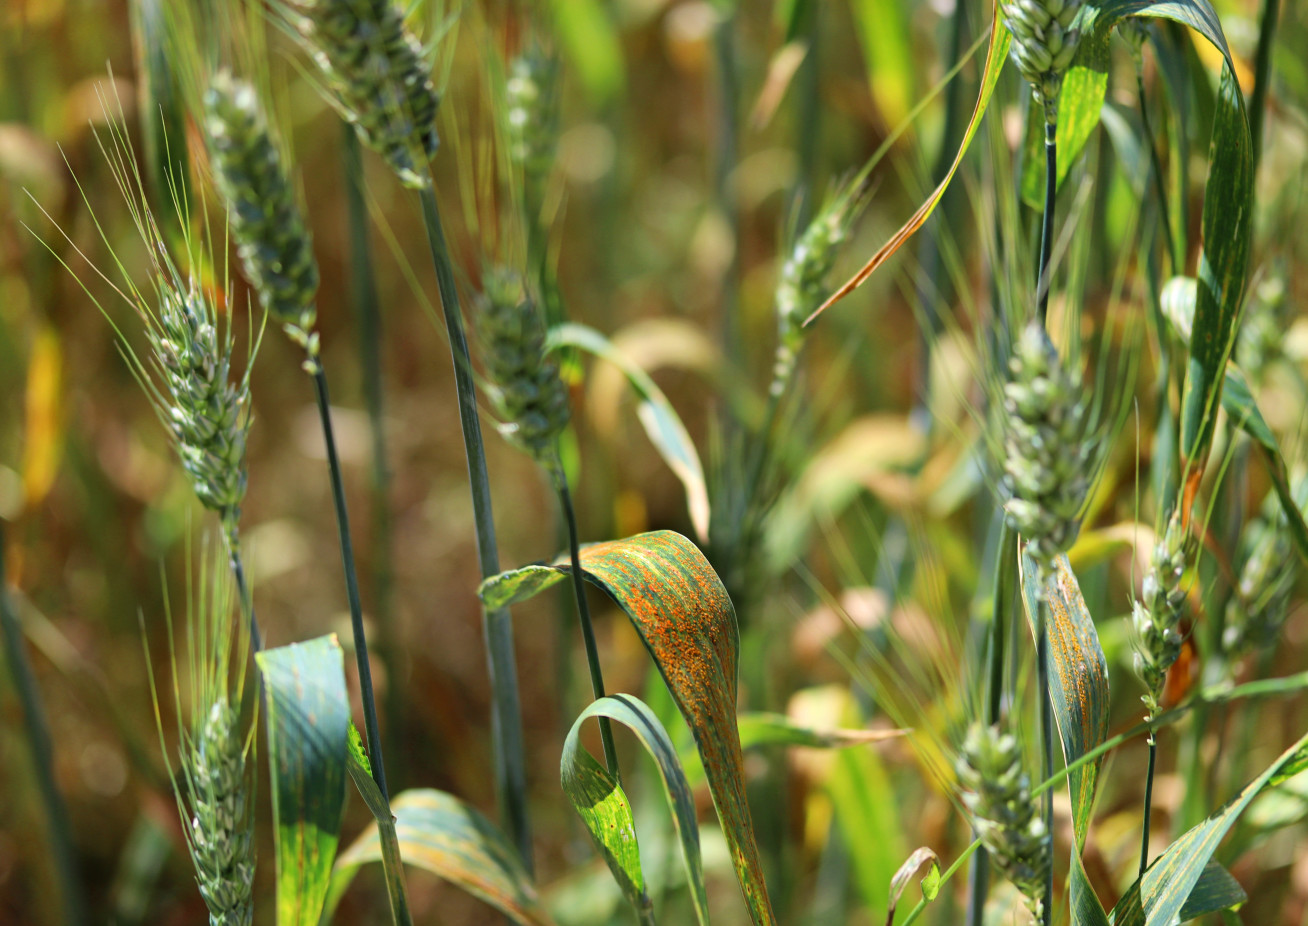 Image of wheat leaf rust (Puccinia triticina) - a fungal disease of wheat.